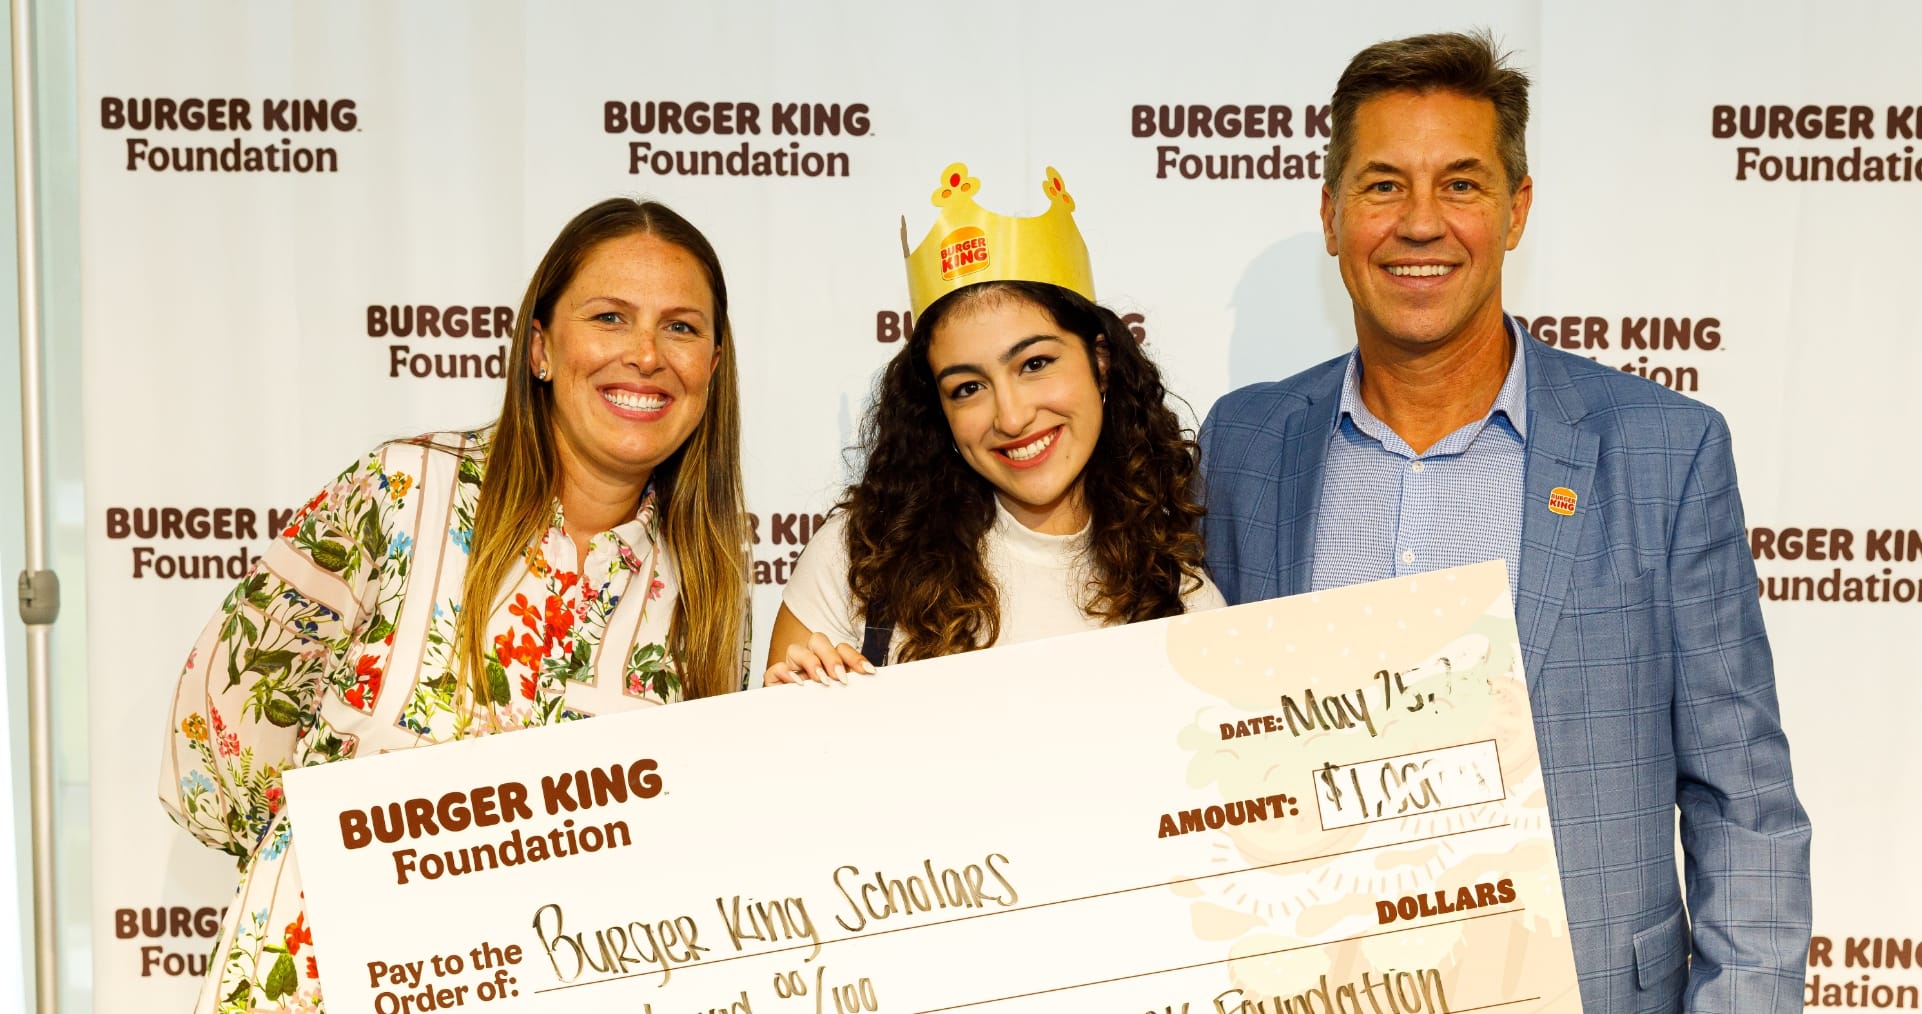 The Burger Kind Foundation